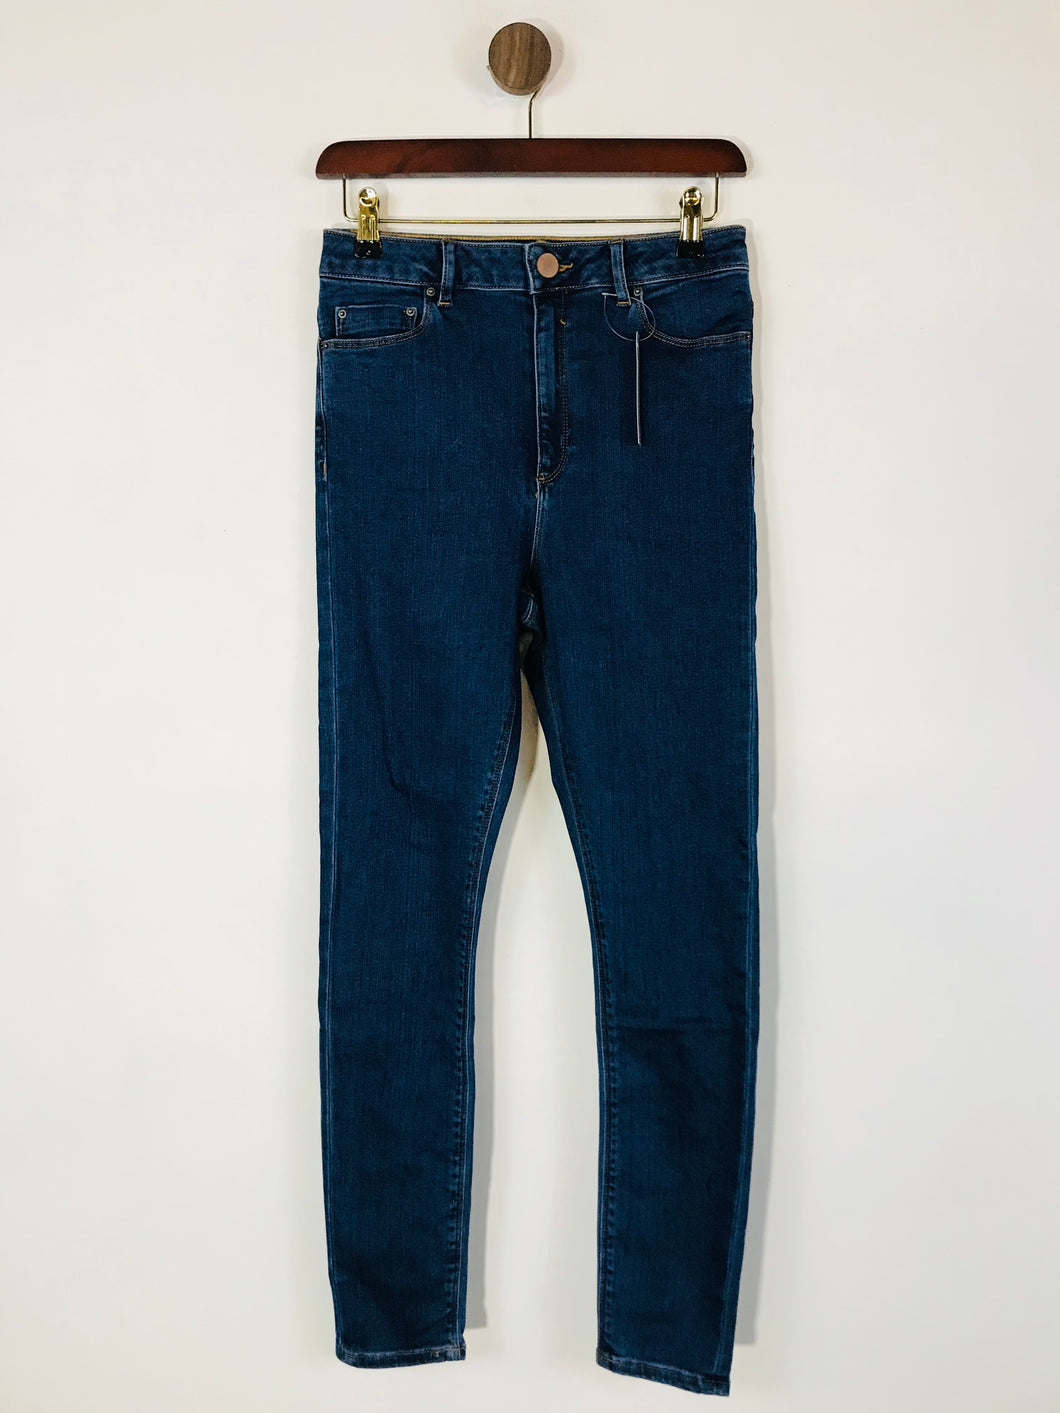 Asos Women's High Waist Skinny Jeans NWT | 28 UK10 | Blue